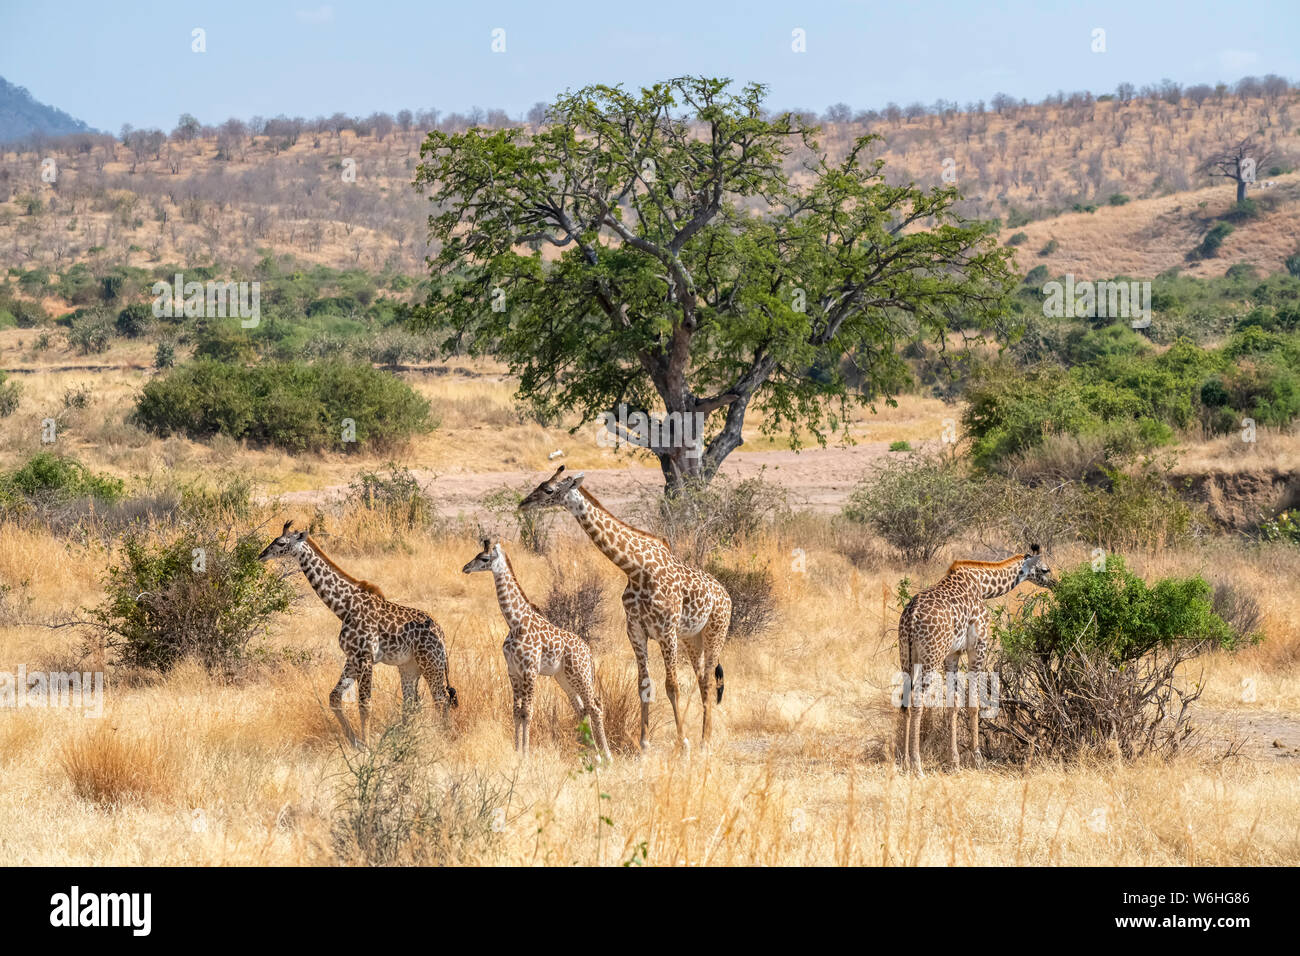 Adult Maasai Giraffe (Giraffa camelopardalis) with three young Giraffes in the golden dry savannah of Ruaha National Park; Tanzania Stock Photo